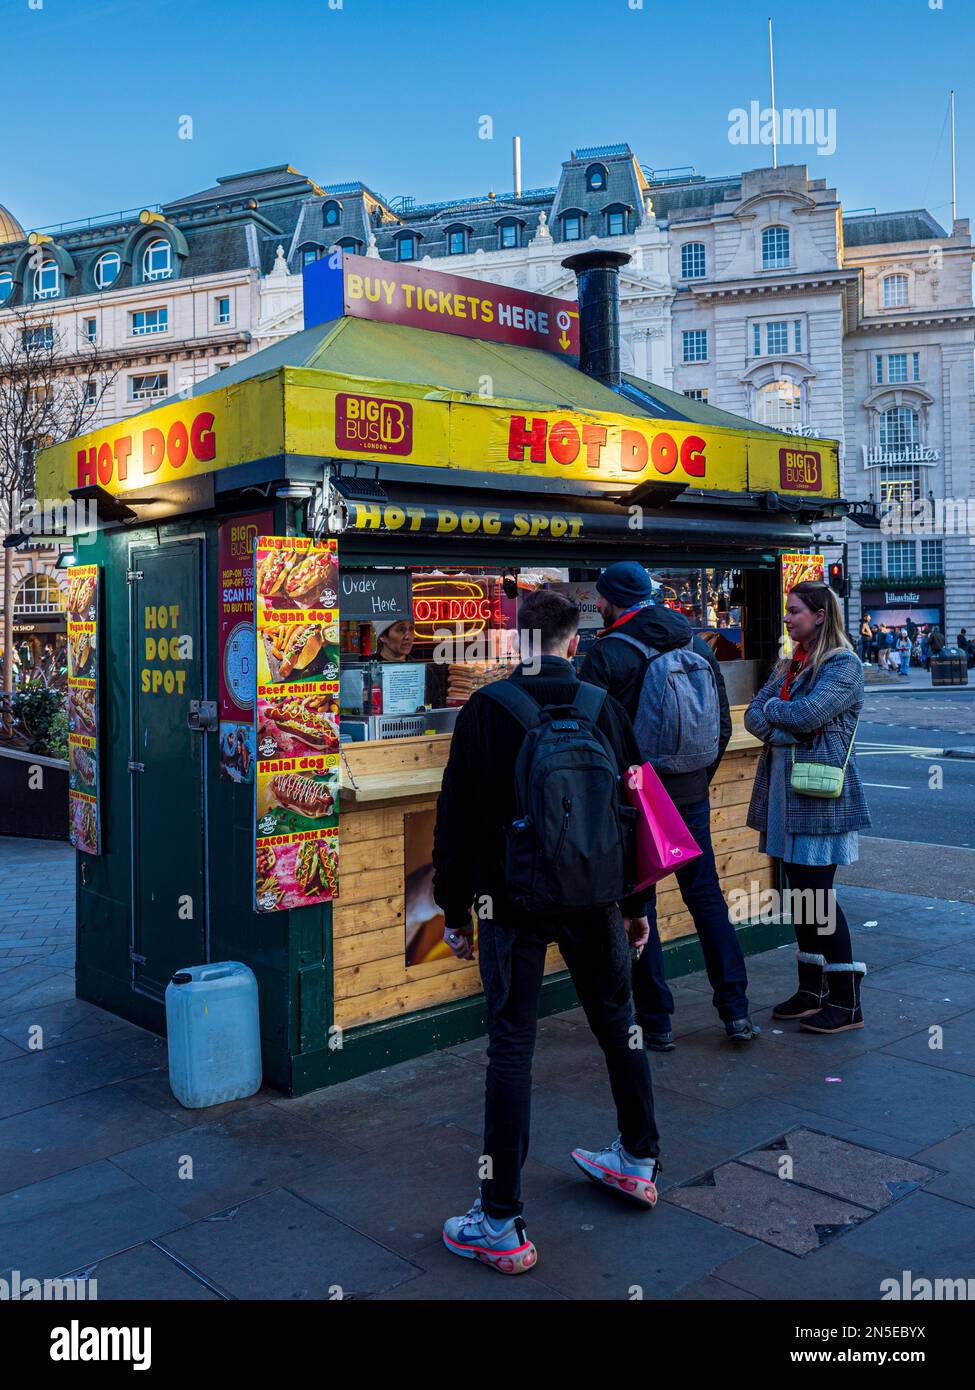 Hot Dog Stall London - Hot Dog Stall am Piccadilly Circus im Zentrum von London. Stockfoto